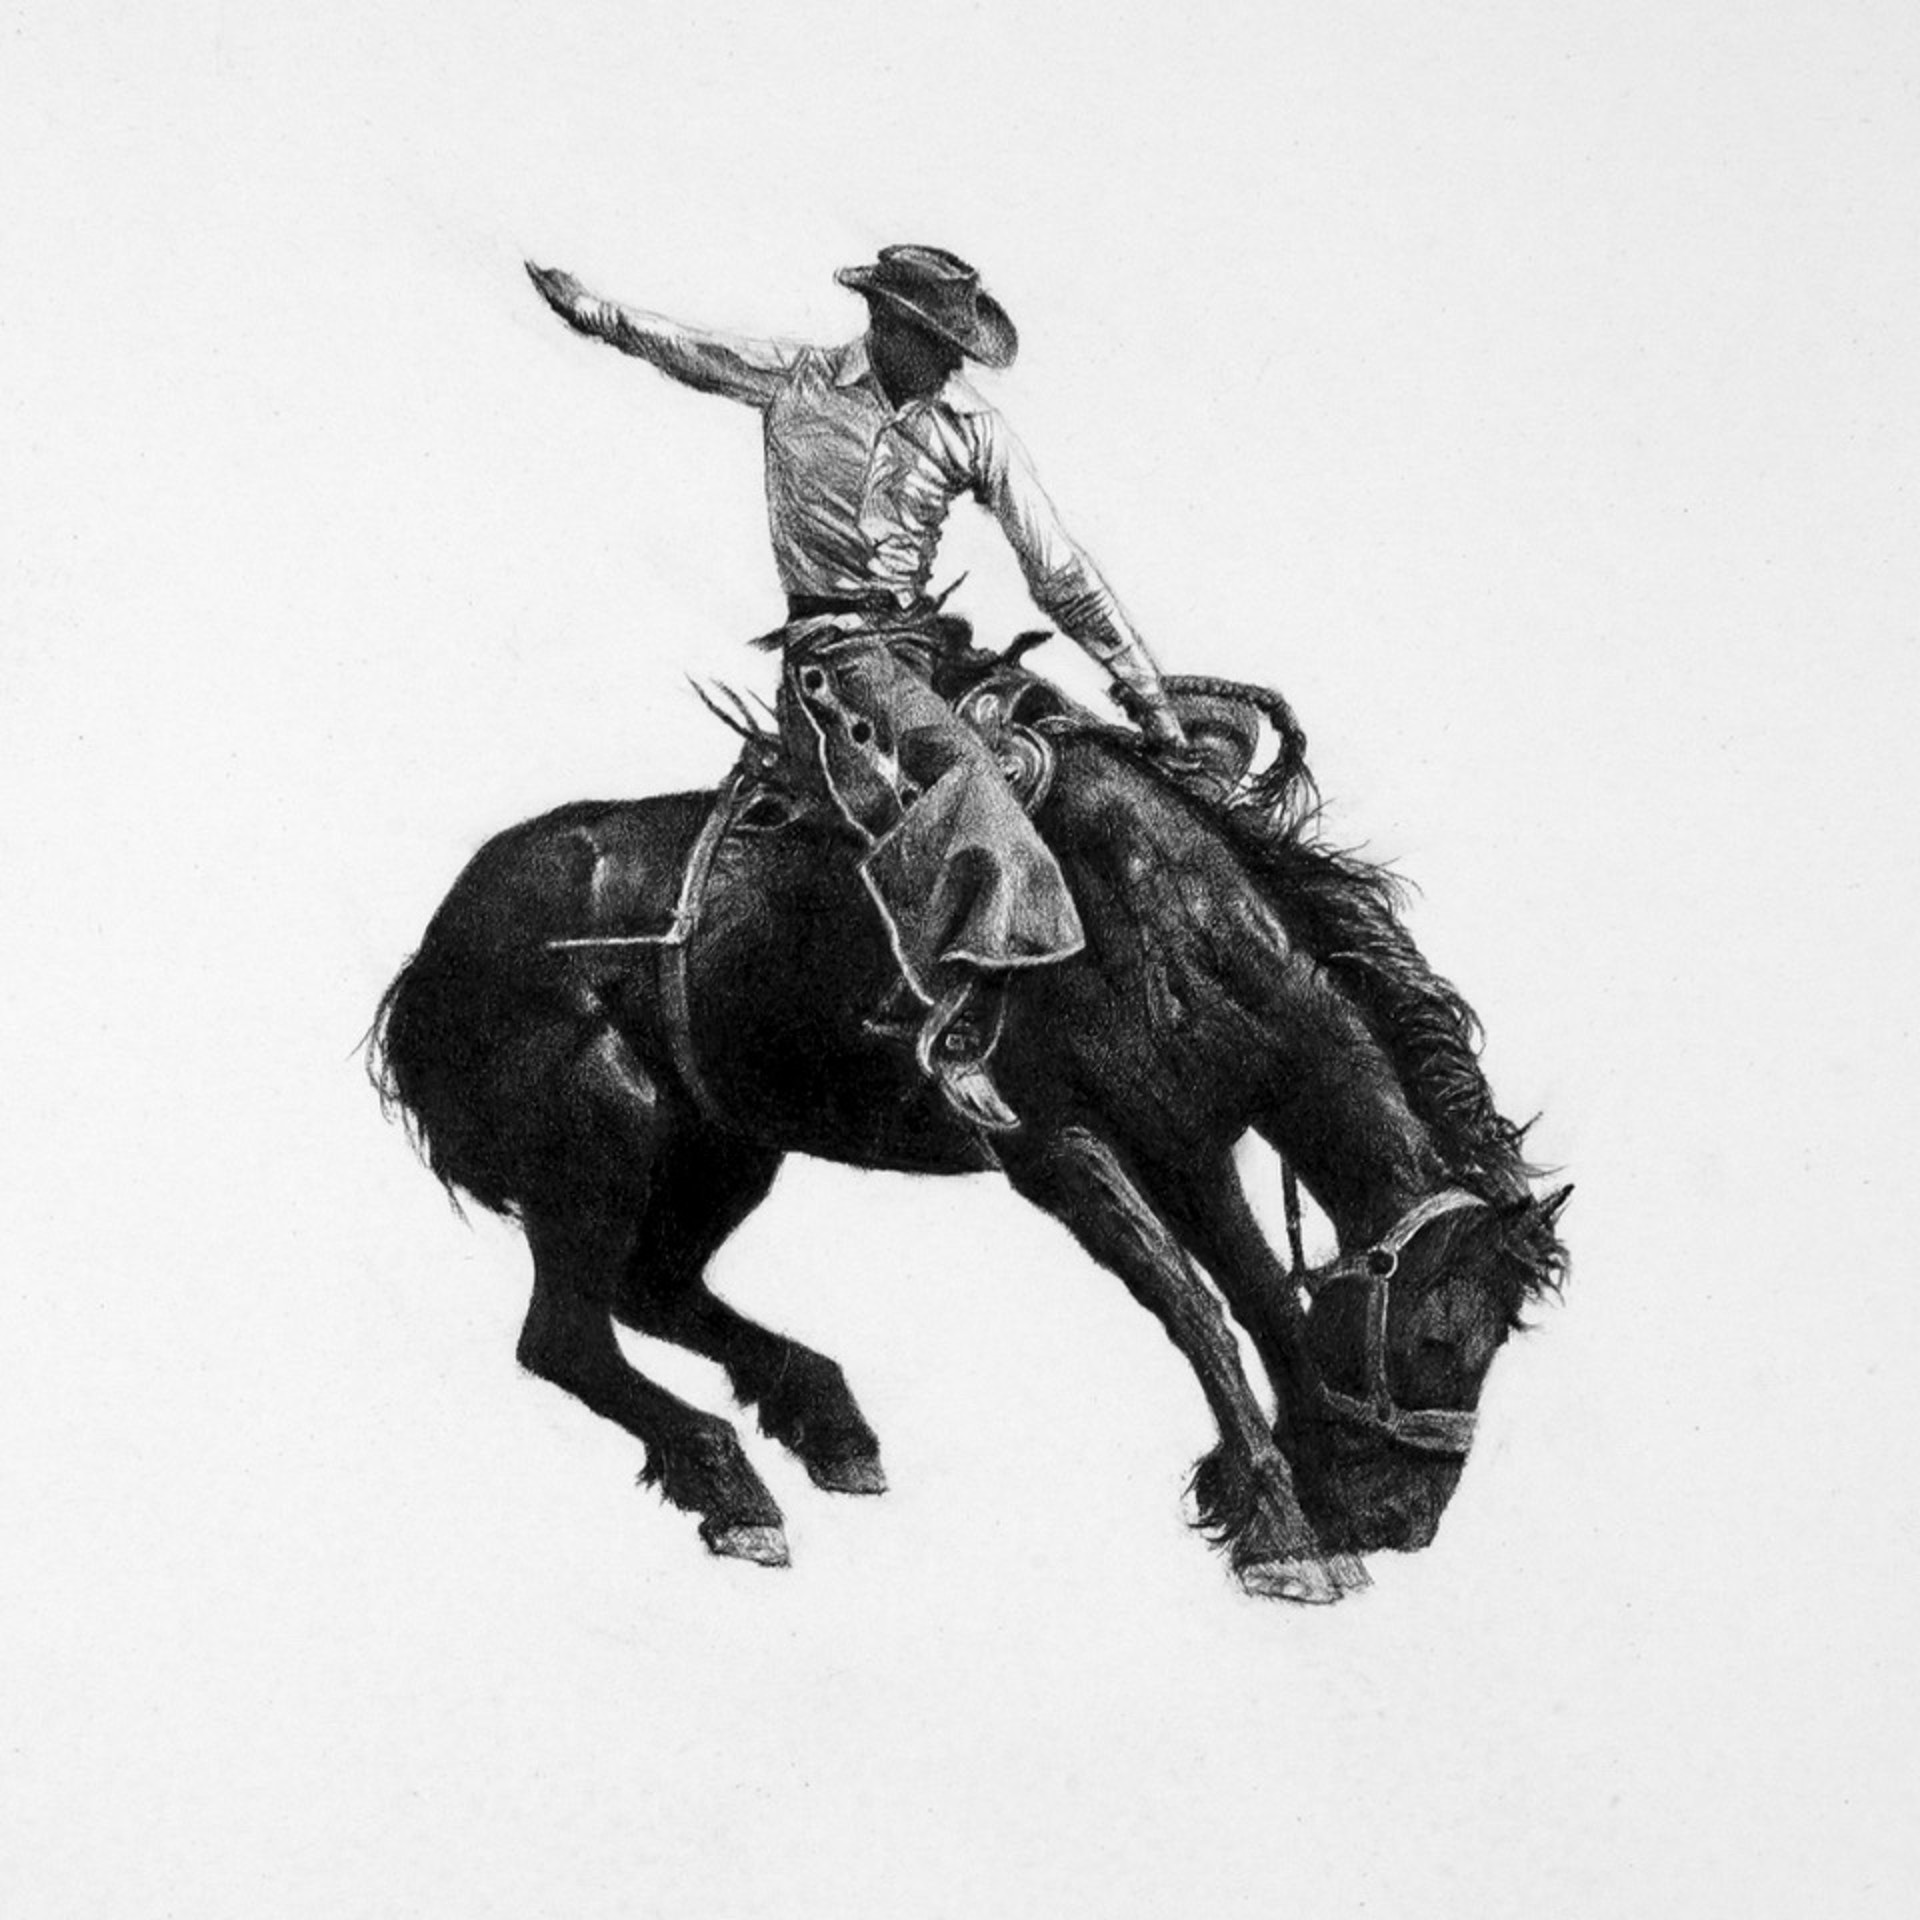 Untitled (bronc rider) by Clayton Porter